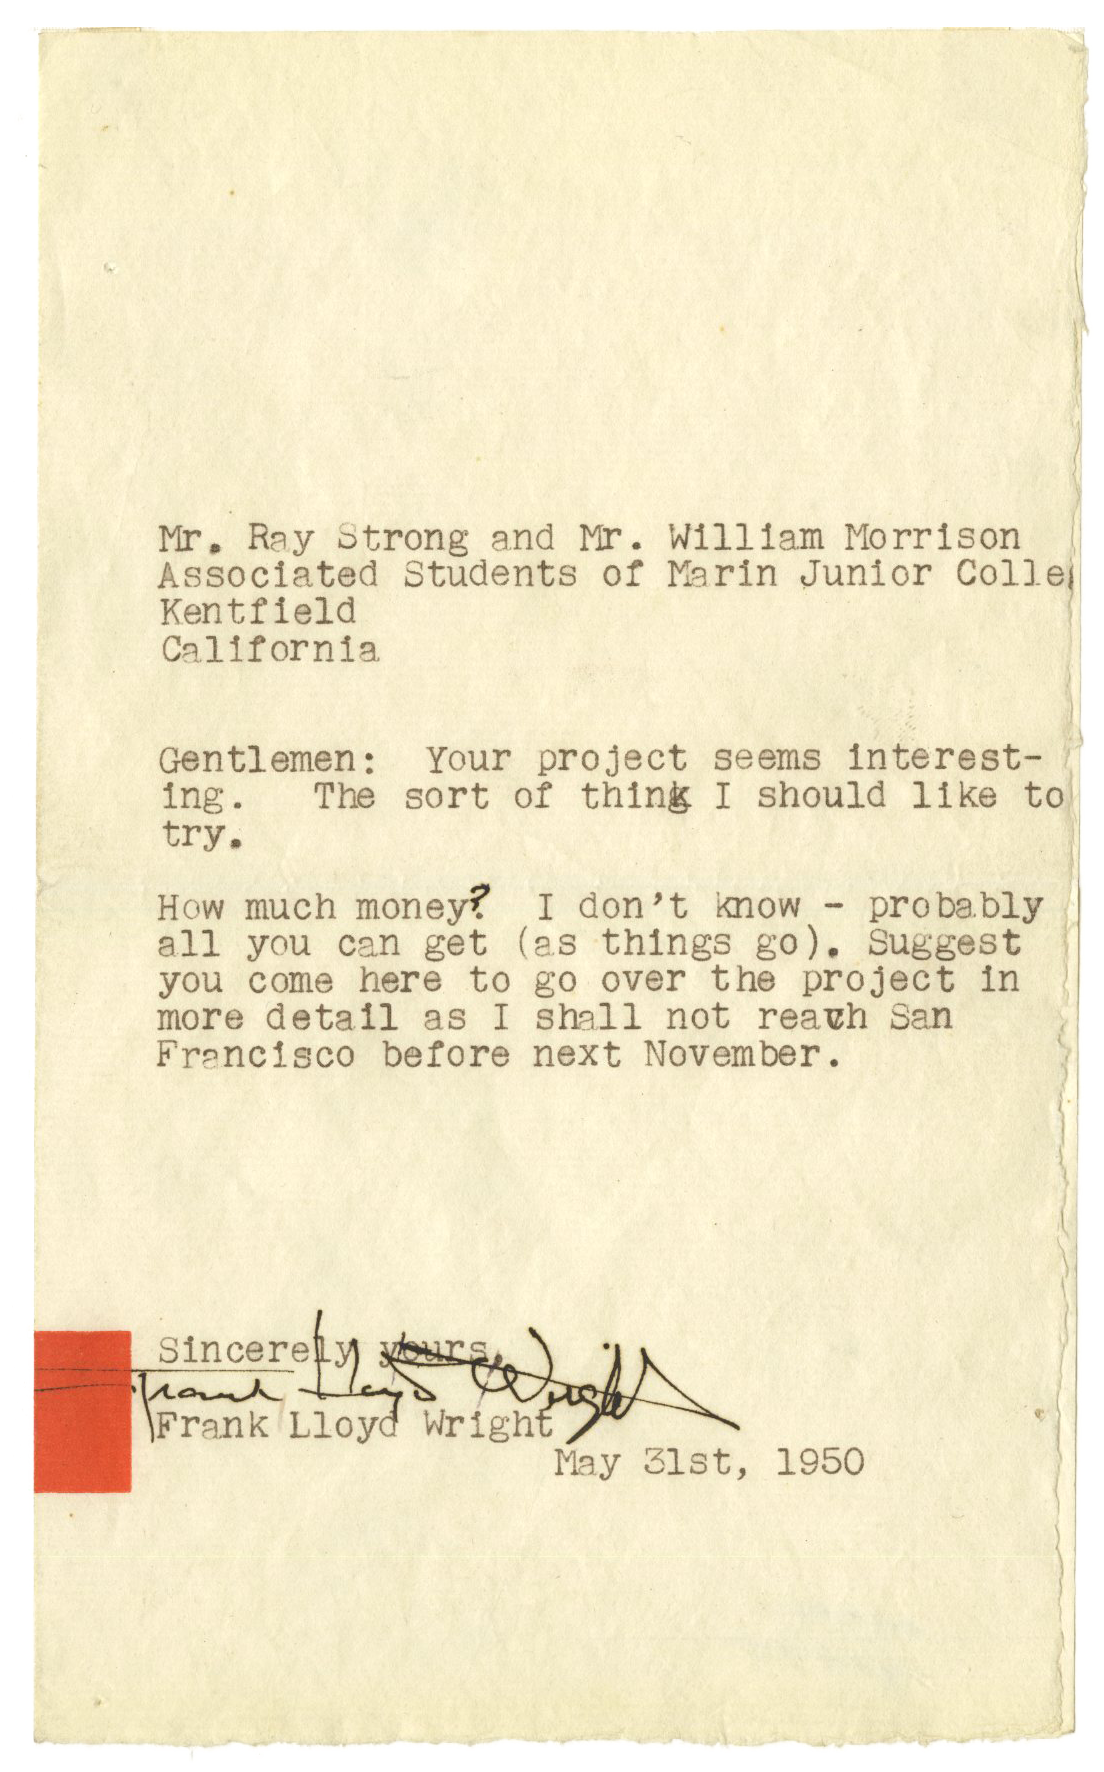 Frank Lloyd Wright - Signed Letter (TLS) - 1950